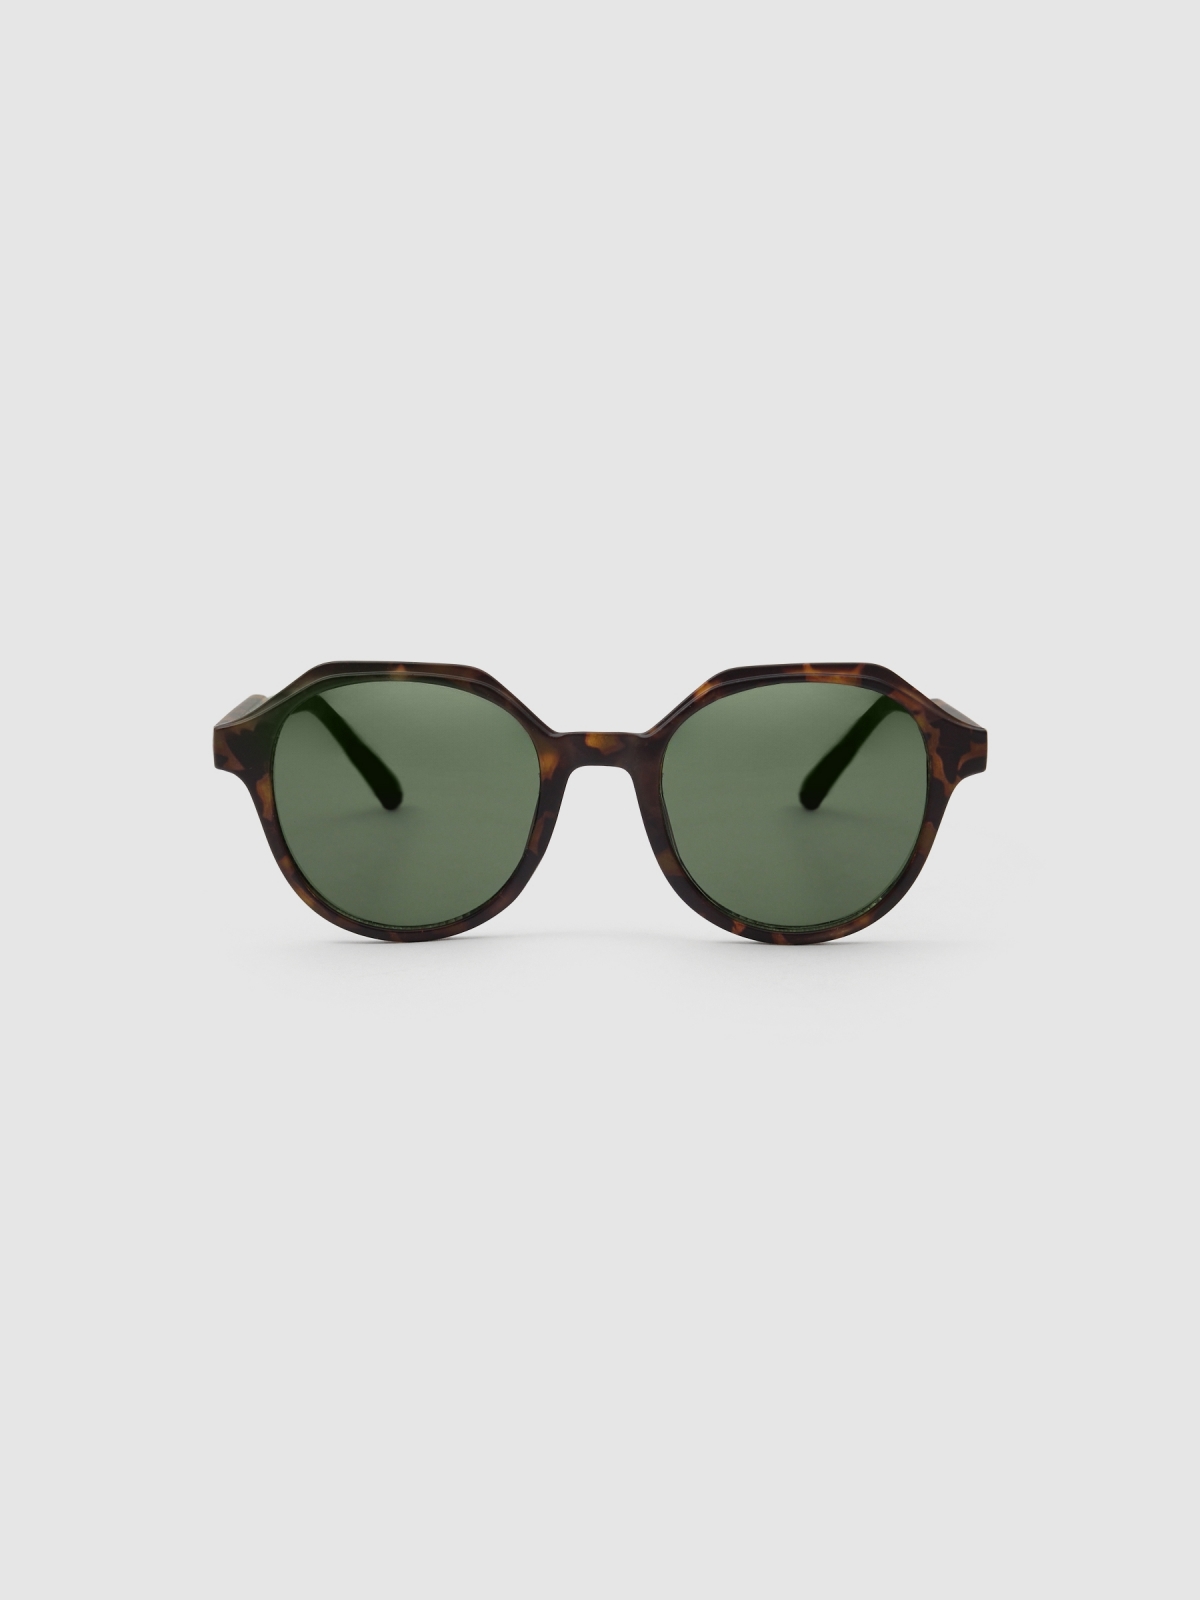 Geometric sunglasses brown